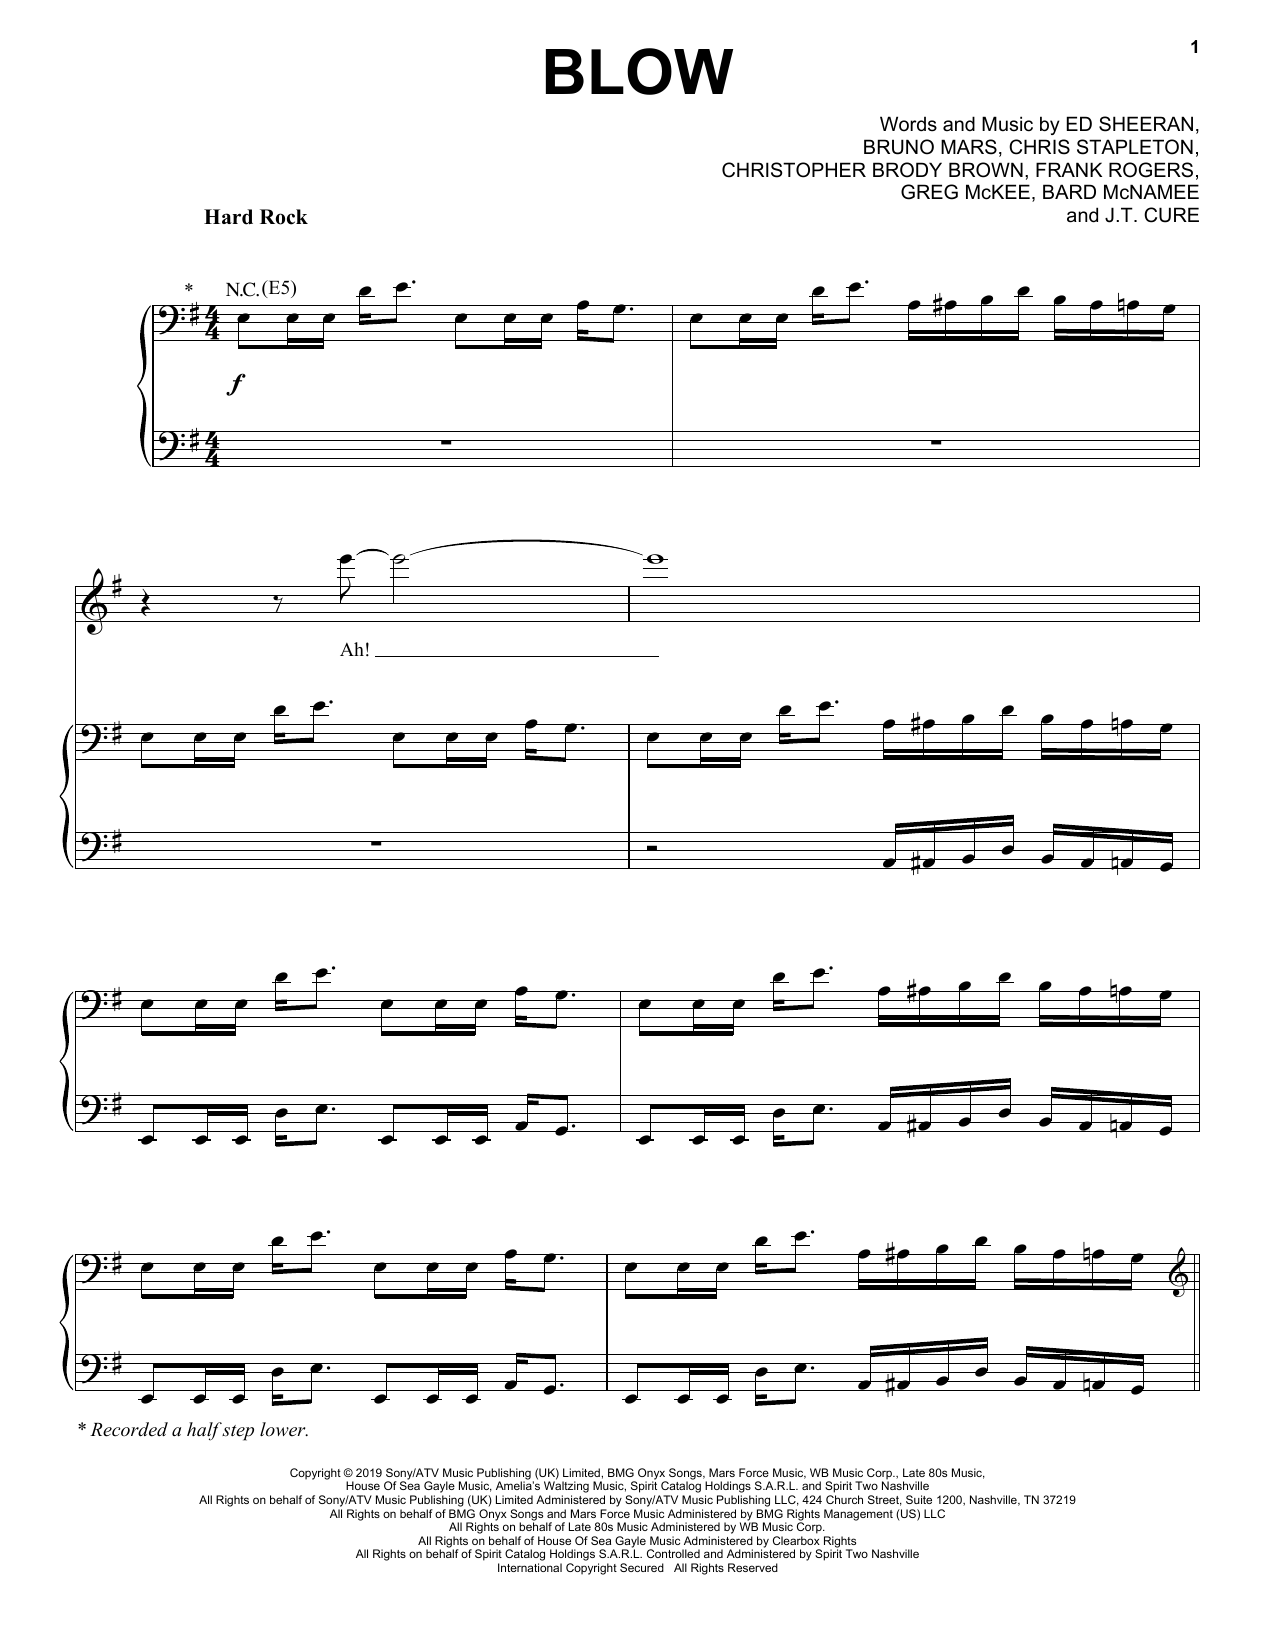 Ed Sheeran, Chris Stapleton & Bruno Mars BLOW Sheet Music Notes & Chords for Guitar Rhythm Tab - Download or Print PDF